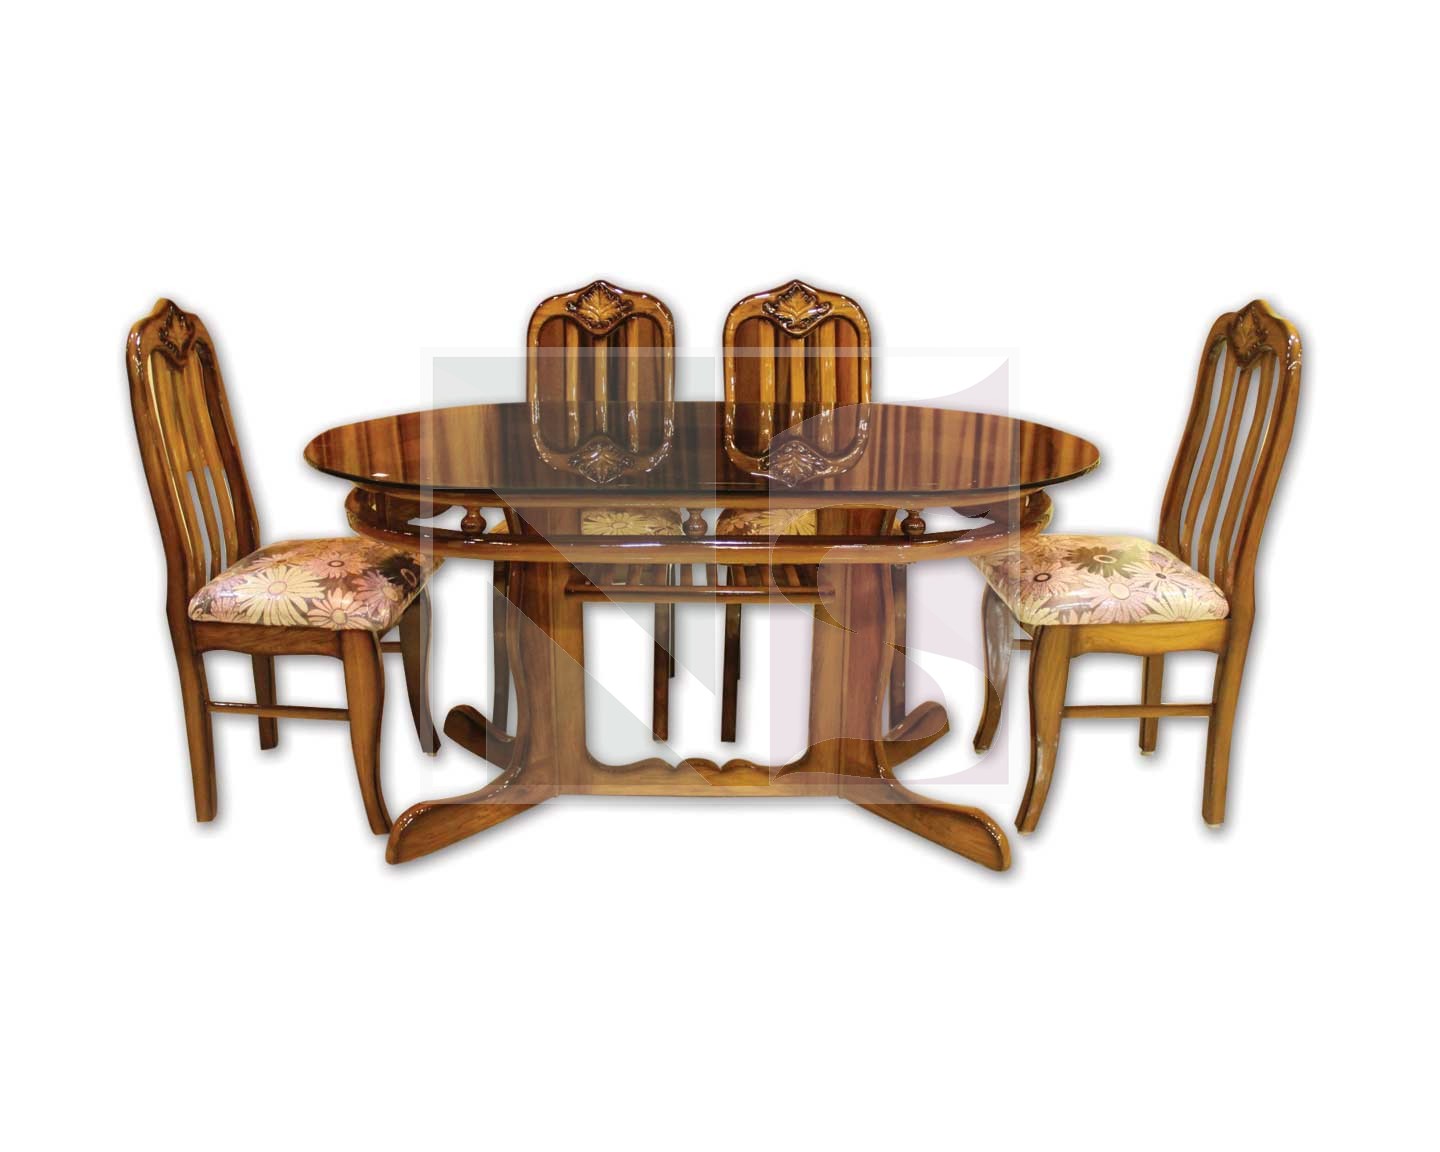 Gharitey Naksa Chairs / Double Motka Dining Table Set